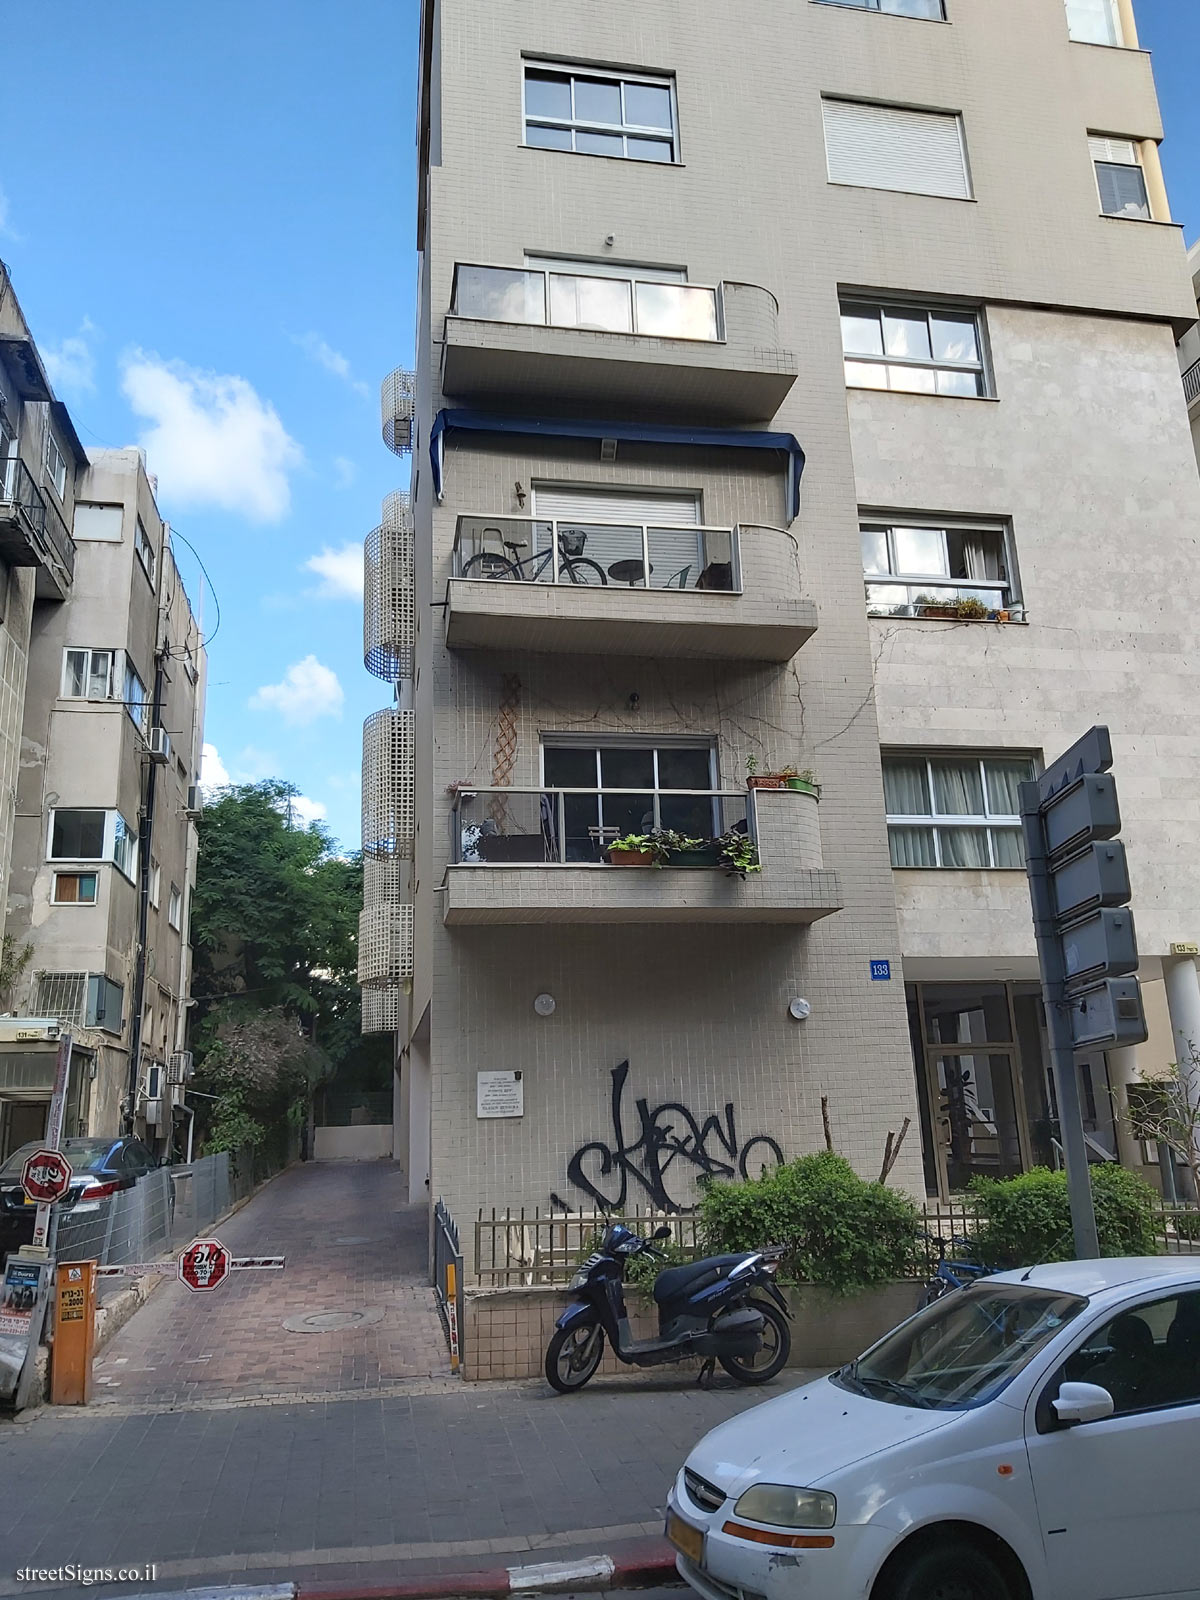 The house of Yaakov Ben-Sira (City Engineer) - Rothschild Blvd 133, Tel Aviv-Yafo, Israel